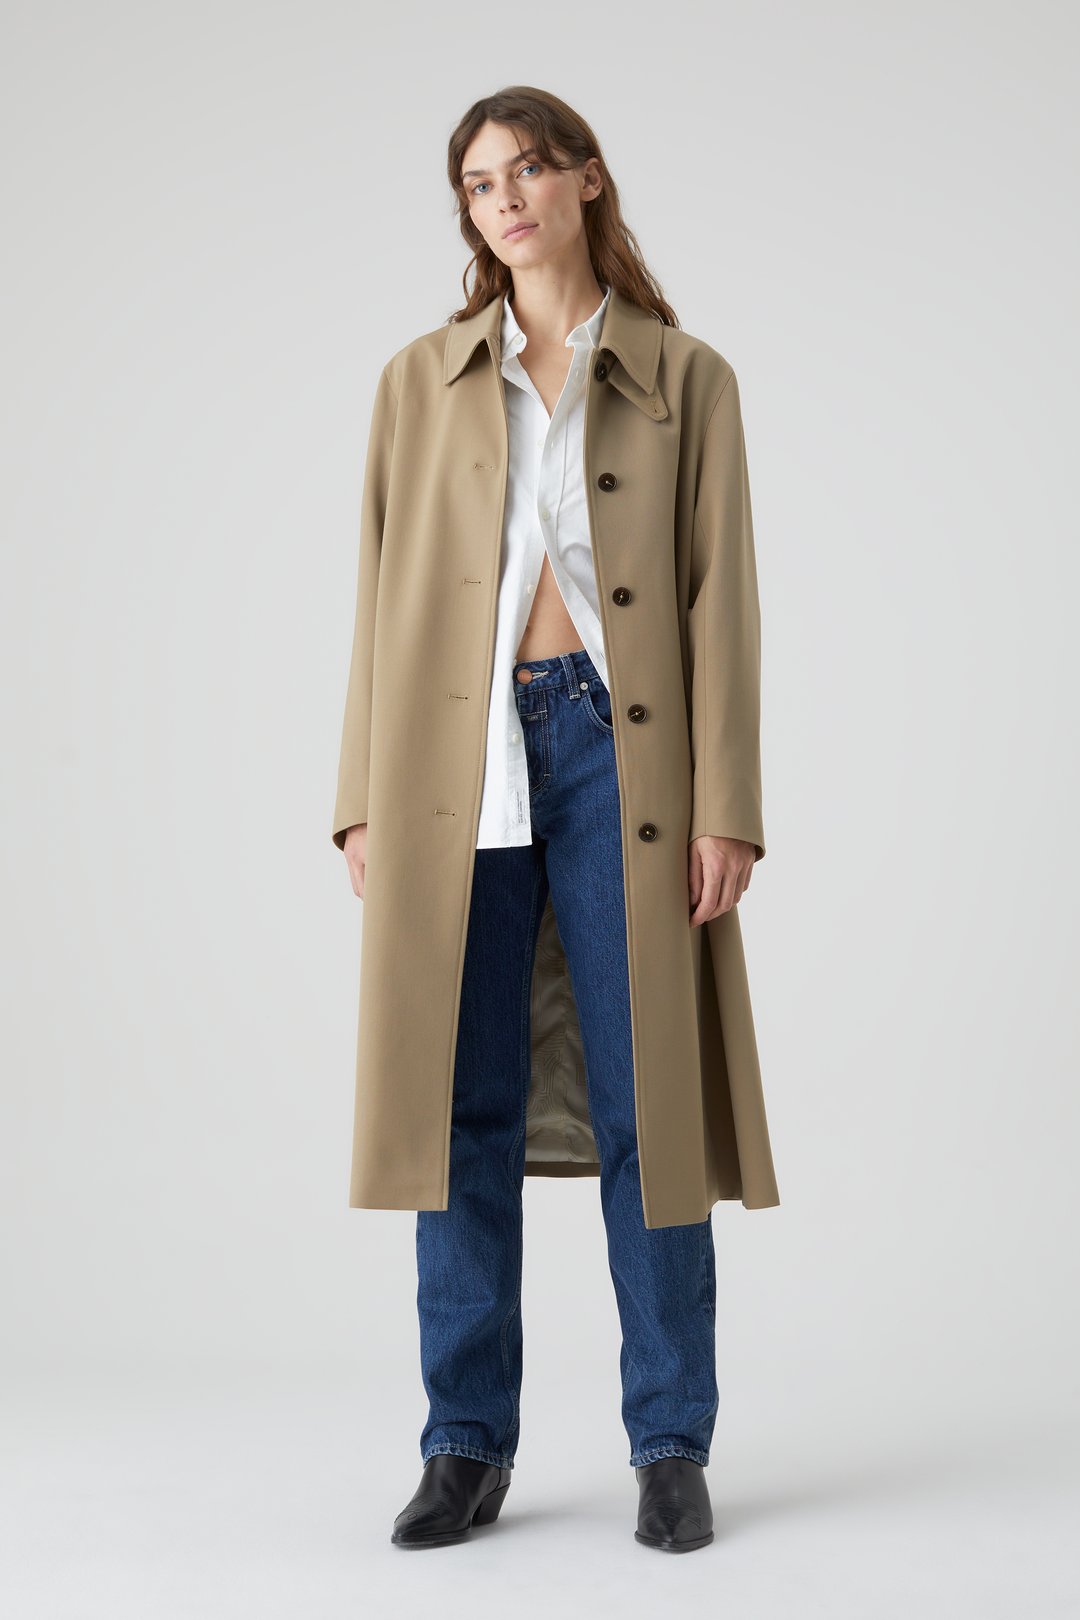 discount 92% Forecast Long coat Brown XL MEN FASHION Coats Basic 